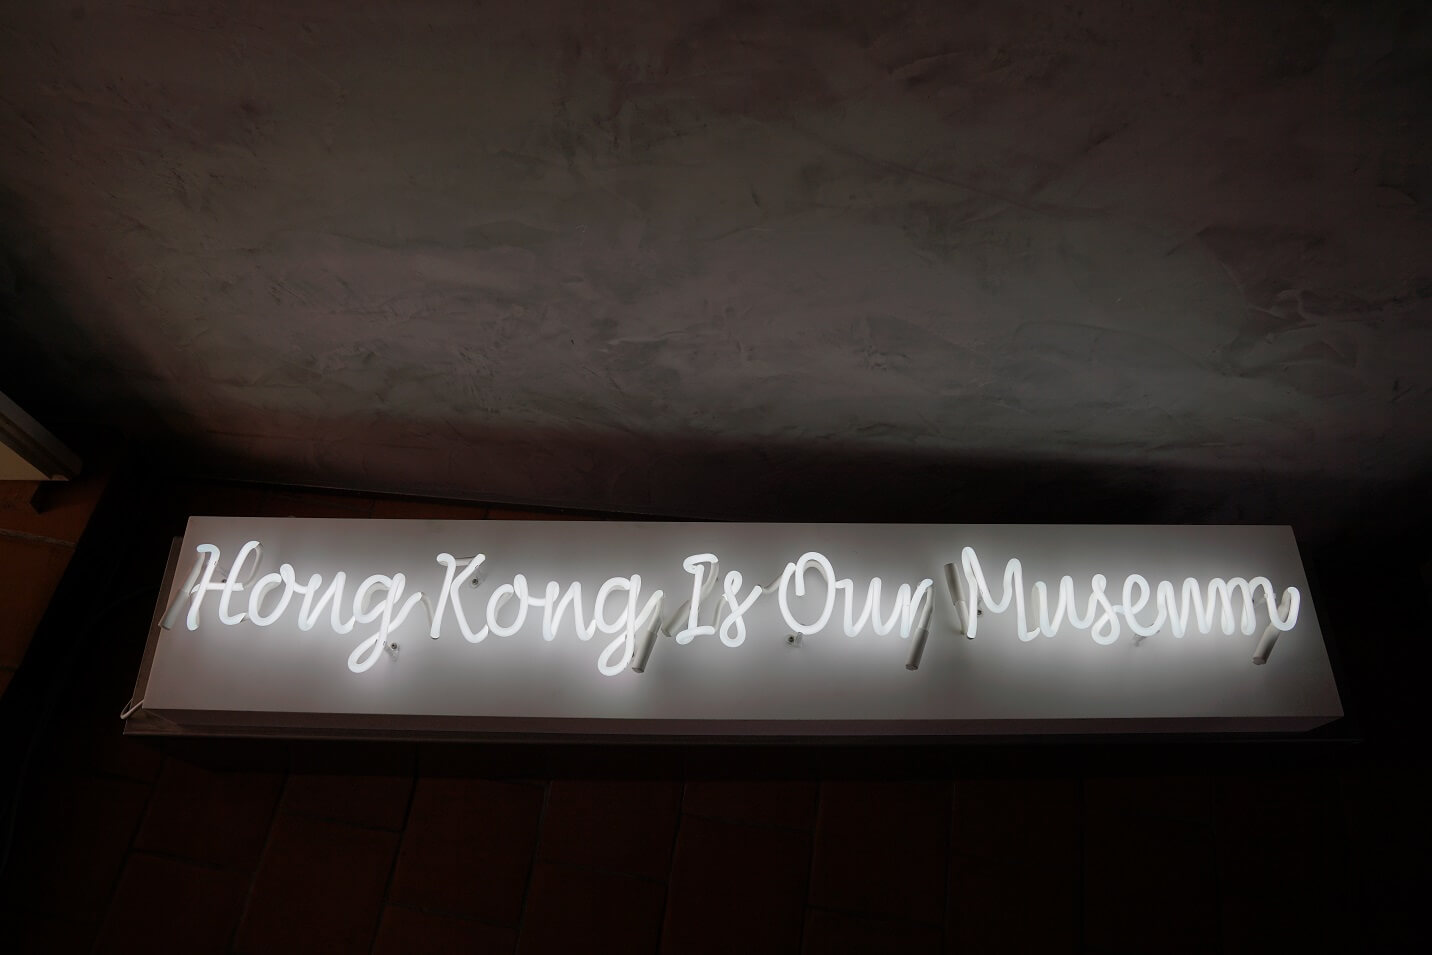 MAP Office《HONG KONG IS OUR MUSEUM》──燈箱放於地上，而且刻意有點歪斜不貼牆身，突出香港由二百六十三座島嶼組成的特點。 